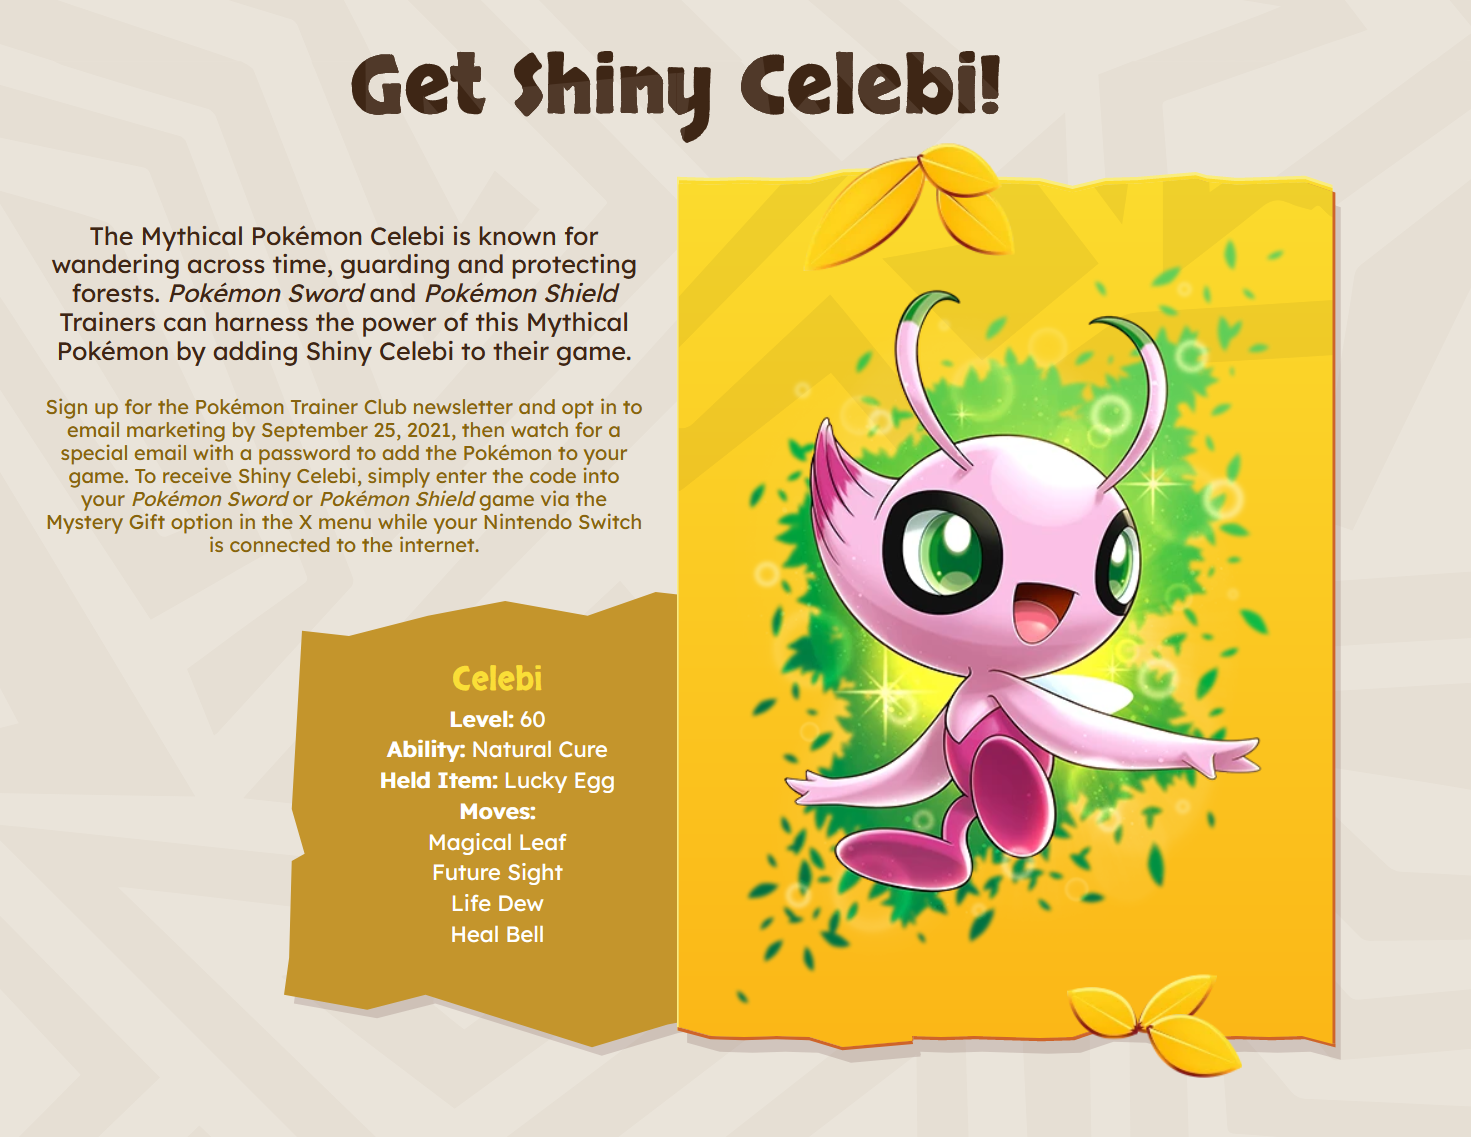 How To Get Dada Zarude & Shiny Celebi in Pokemon Sword & Shield (USA/NA  Event) 